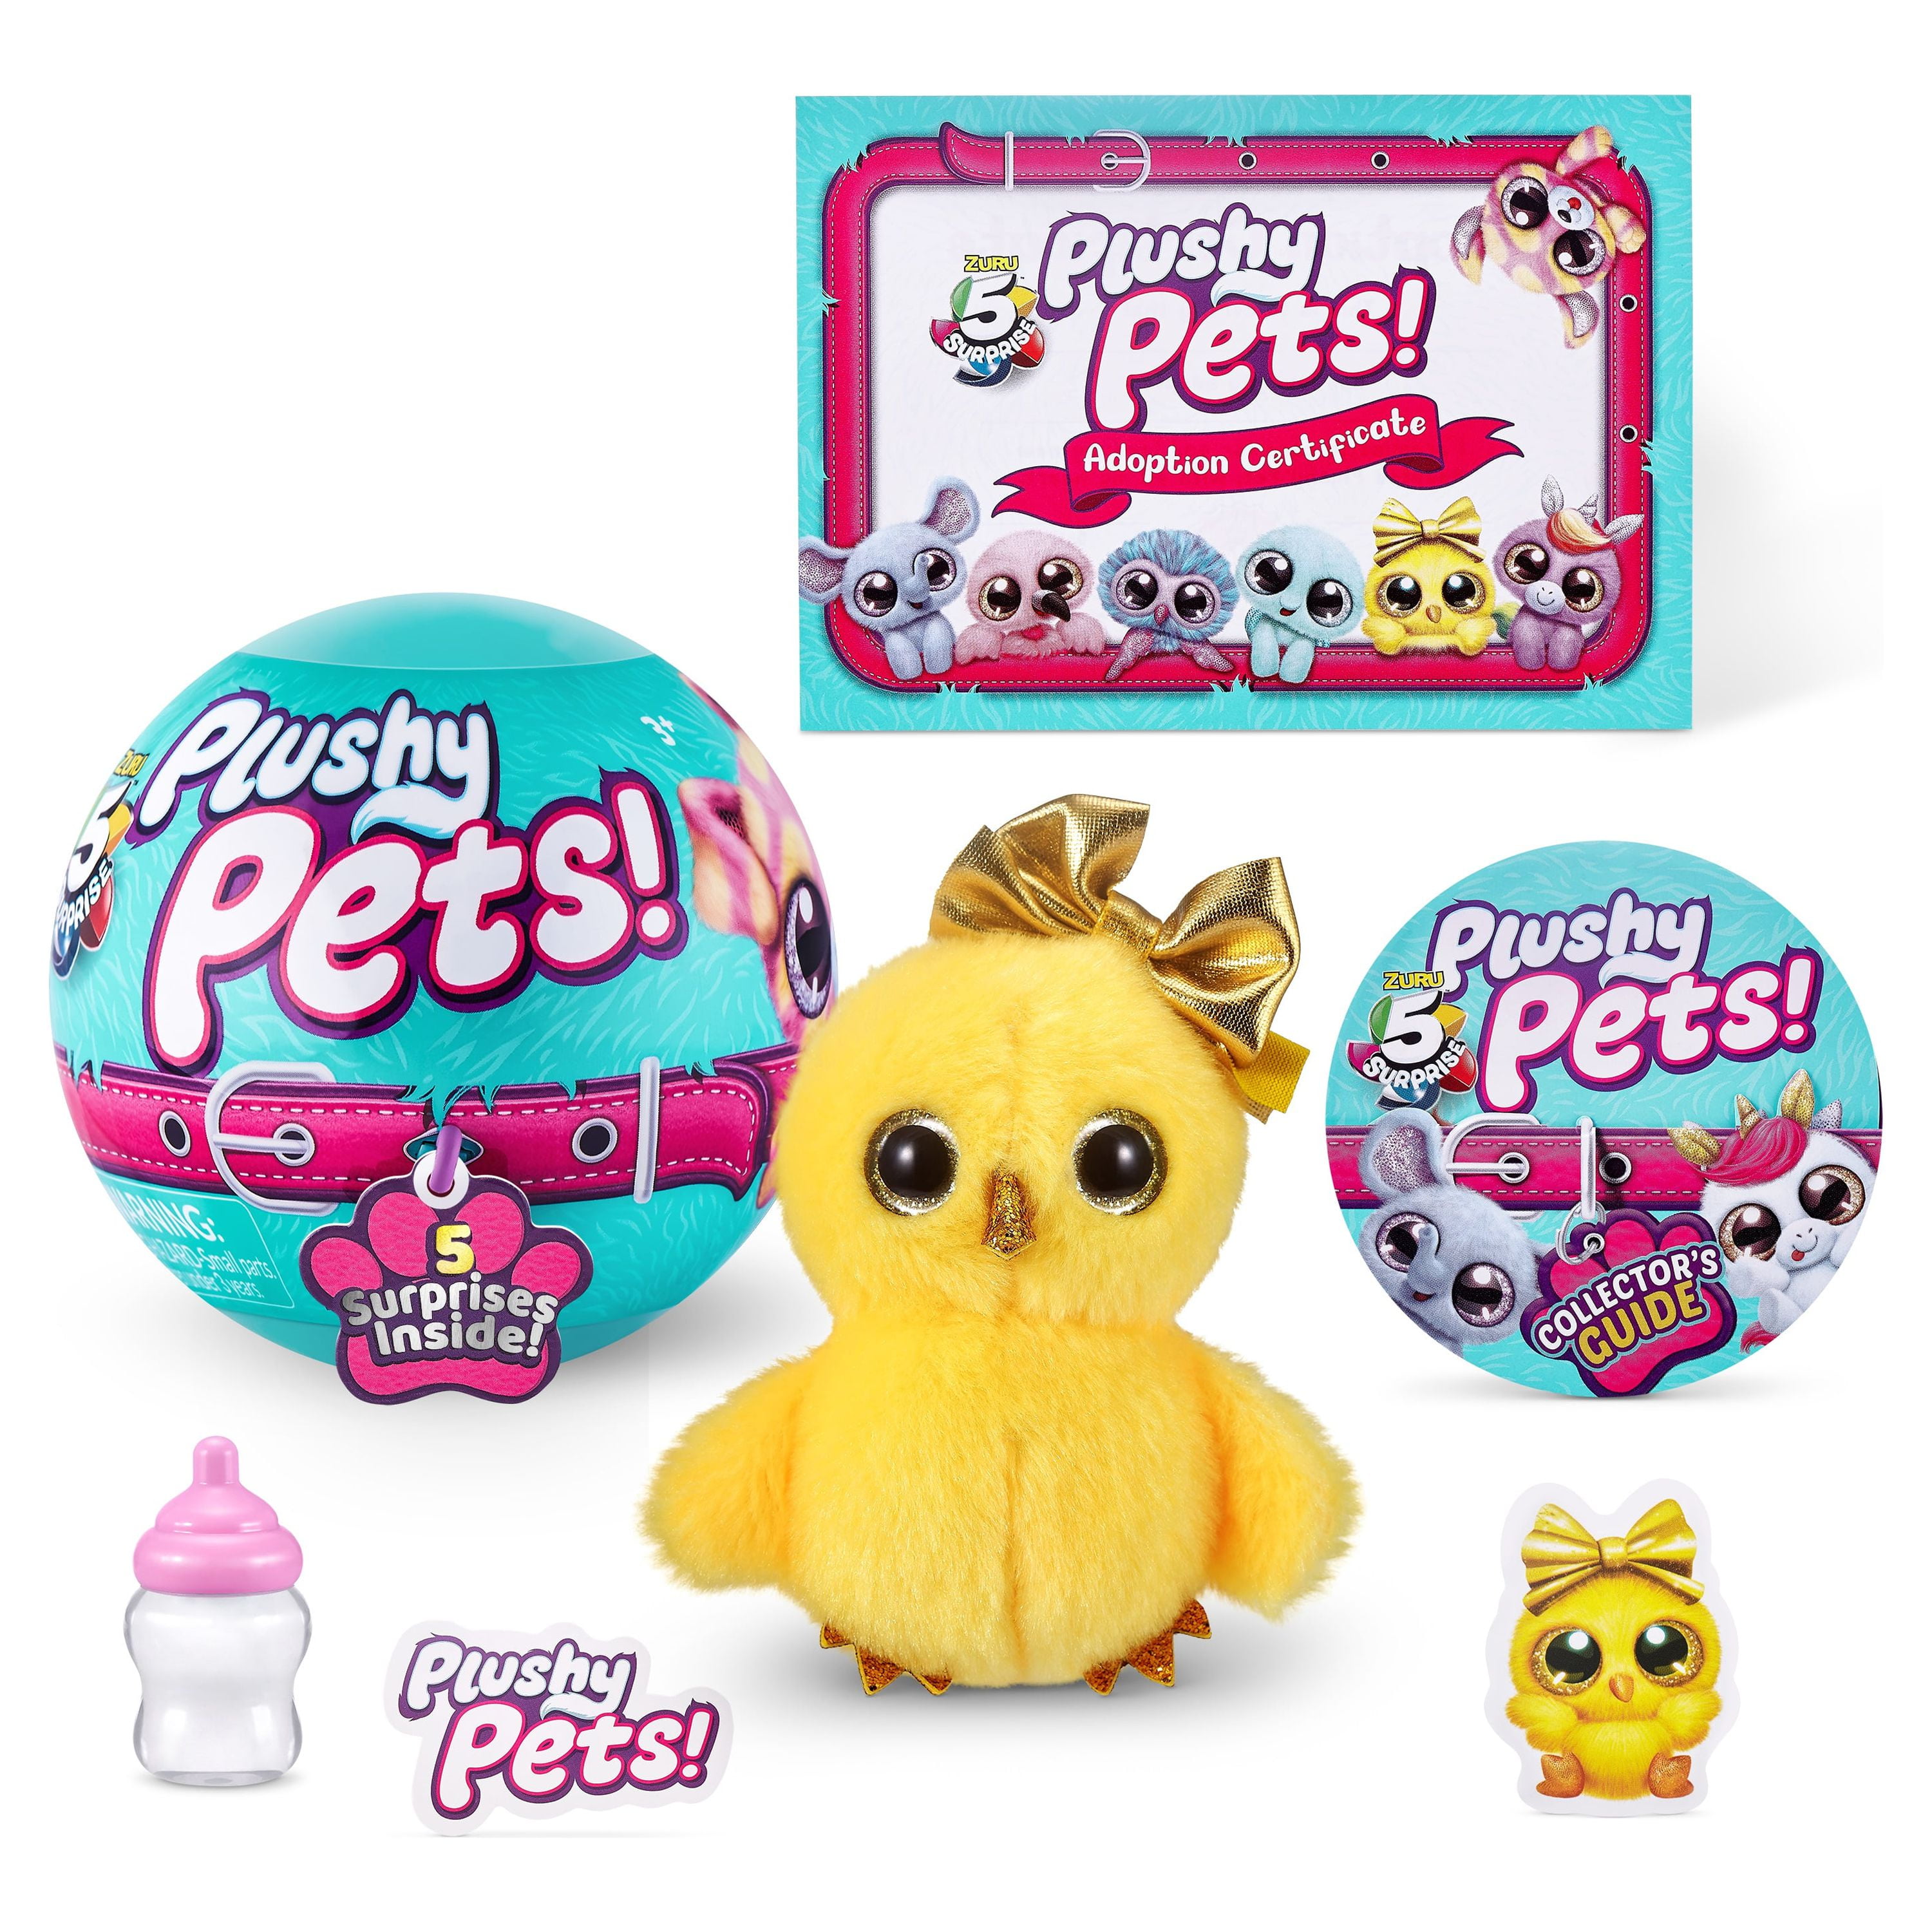 Adopt Me! 5 Surprise Plush Pets, Stuffed Animal Plush Toy